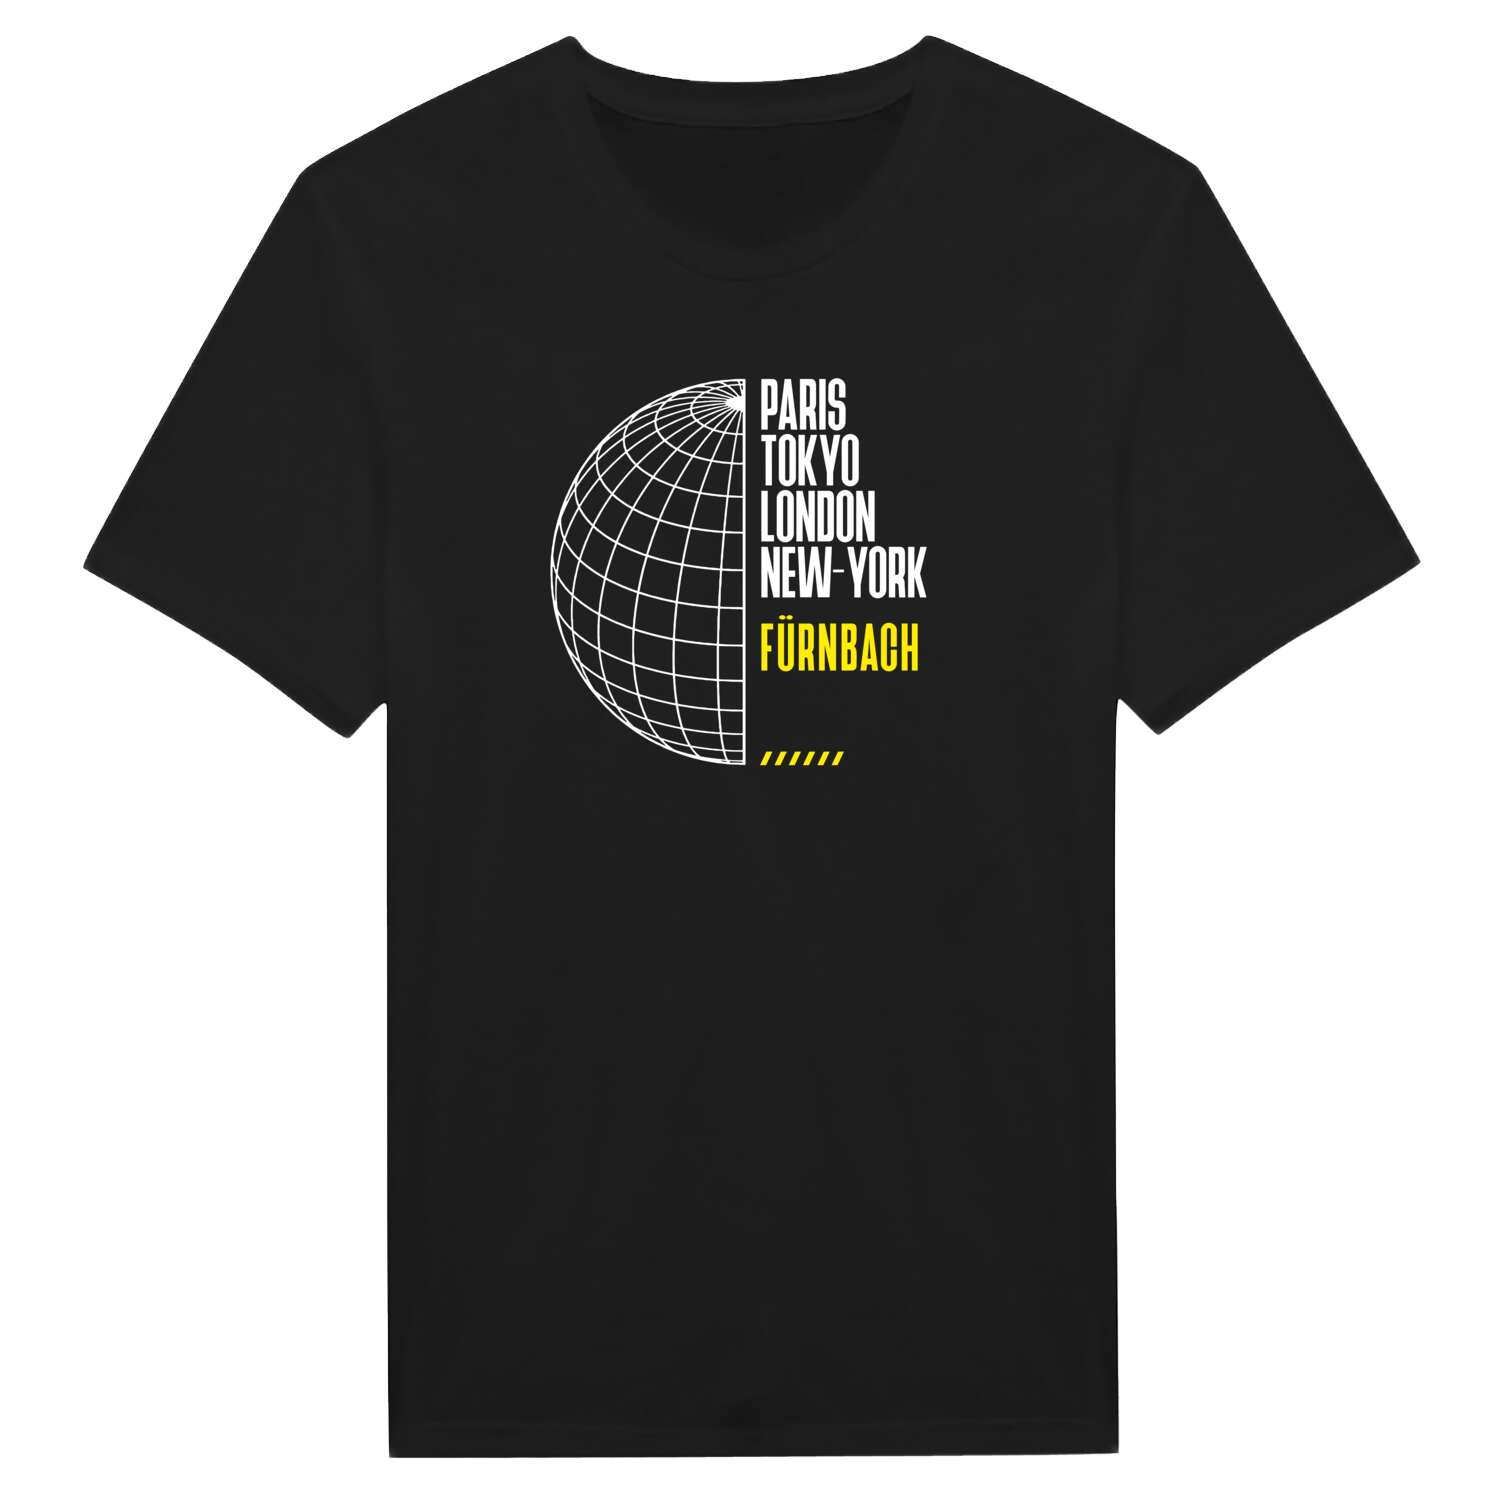 Fürnbach T-Shirt »Paris Tokyo London«